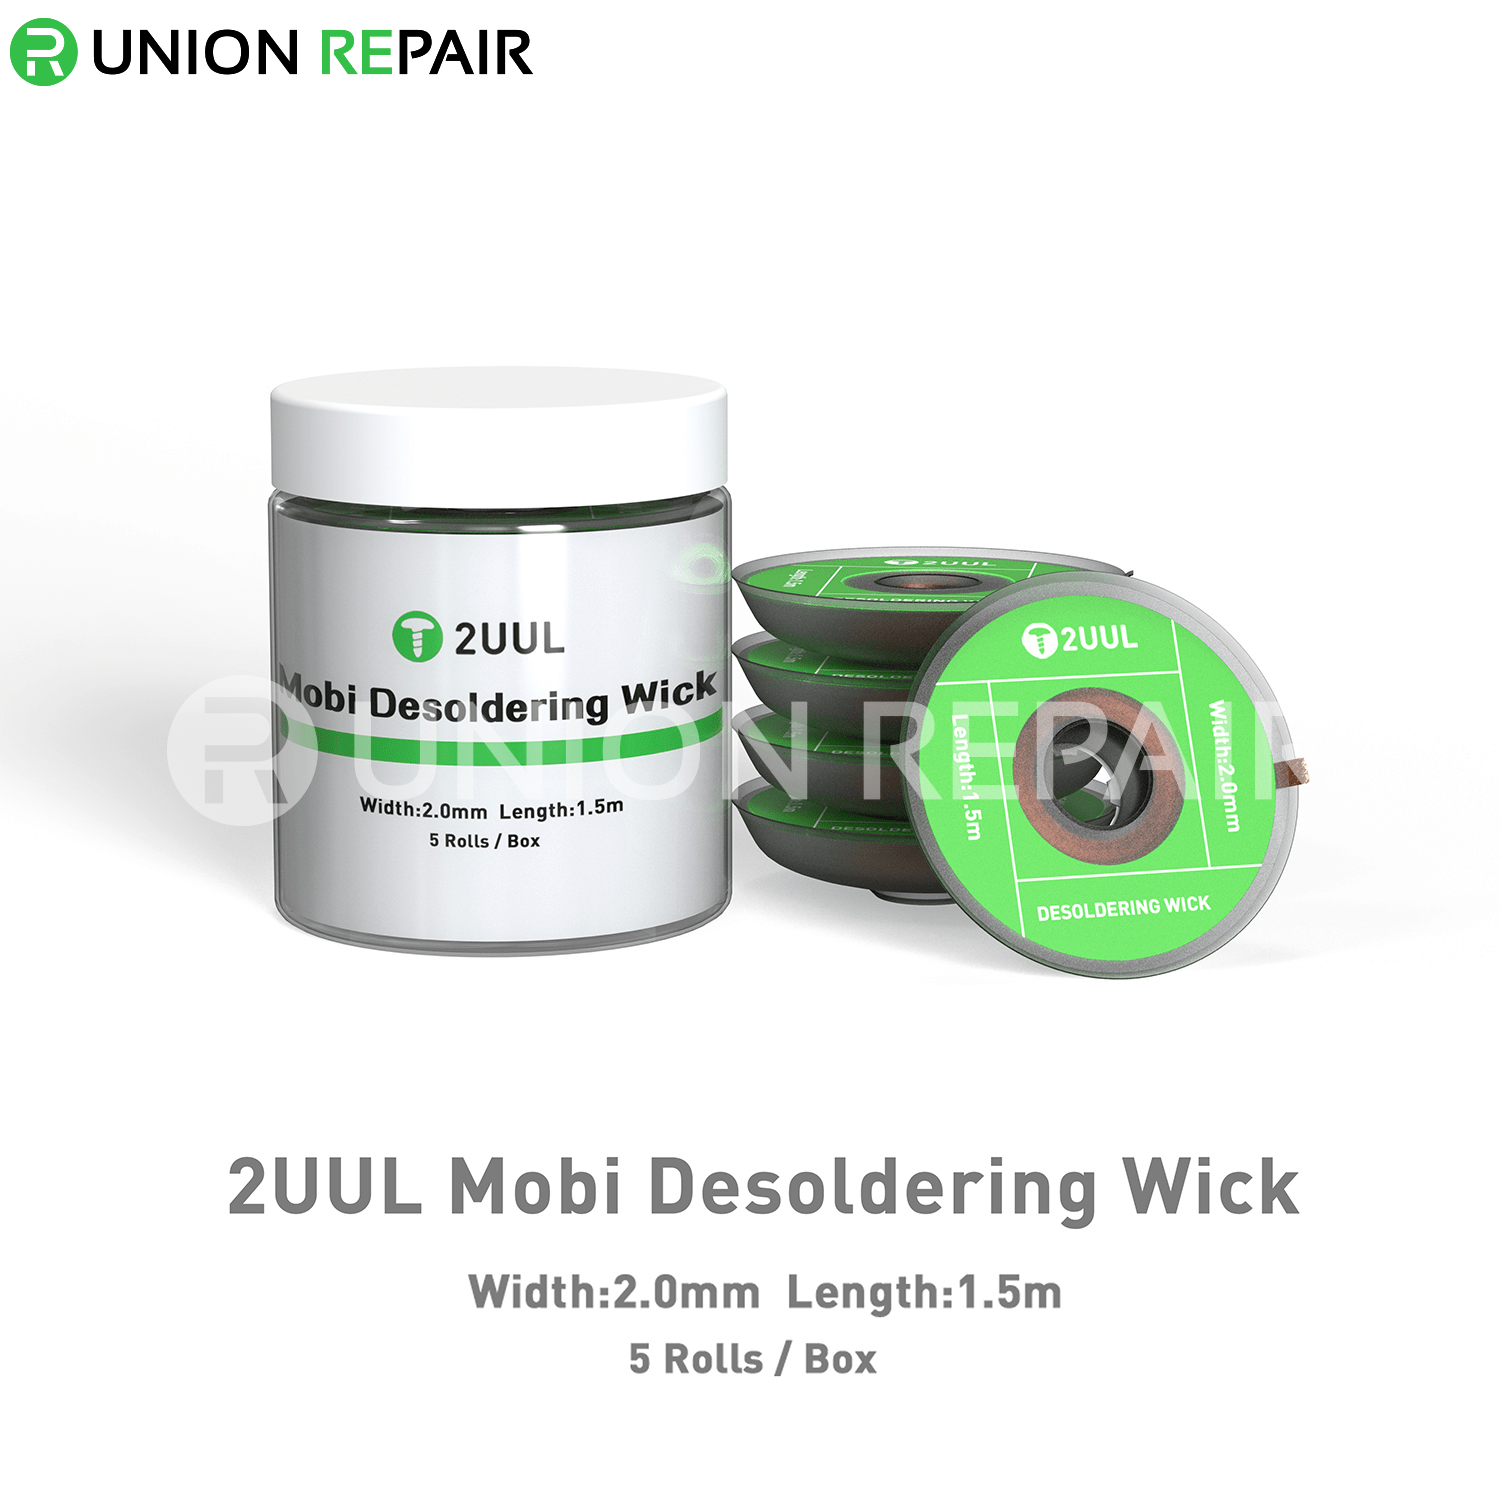 2UUL Mobi Desoldering Wick CY2015 (5 Rolls/Box)